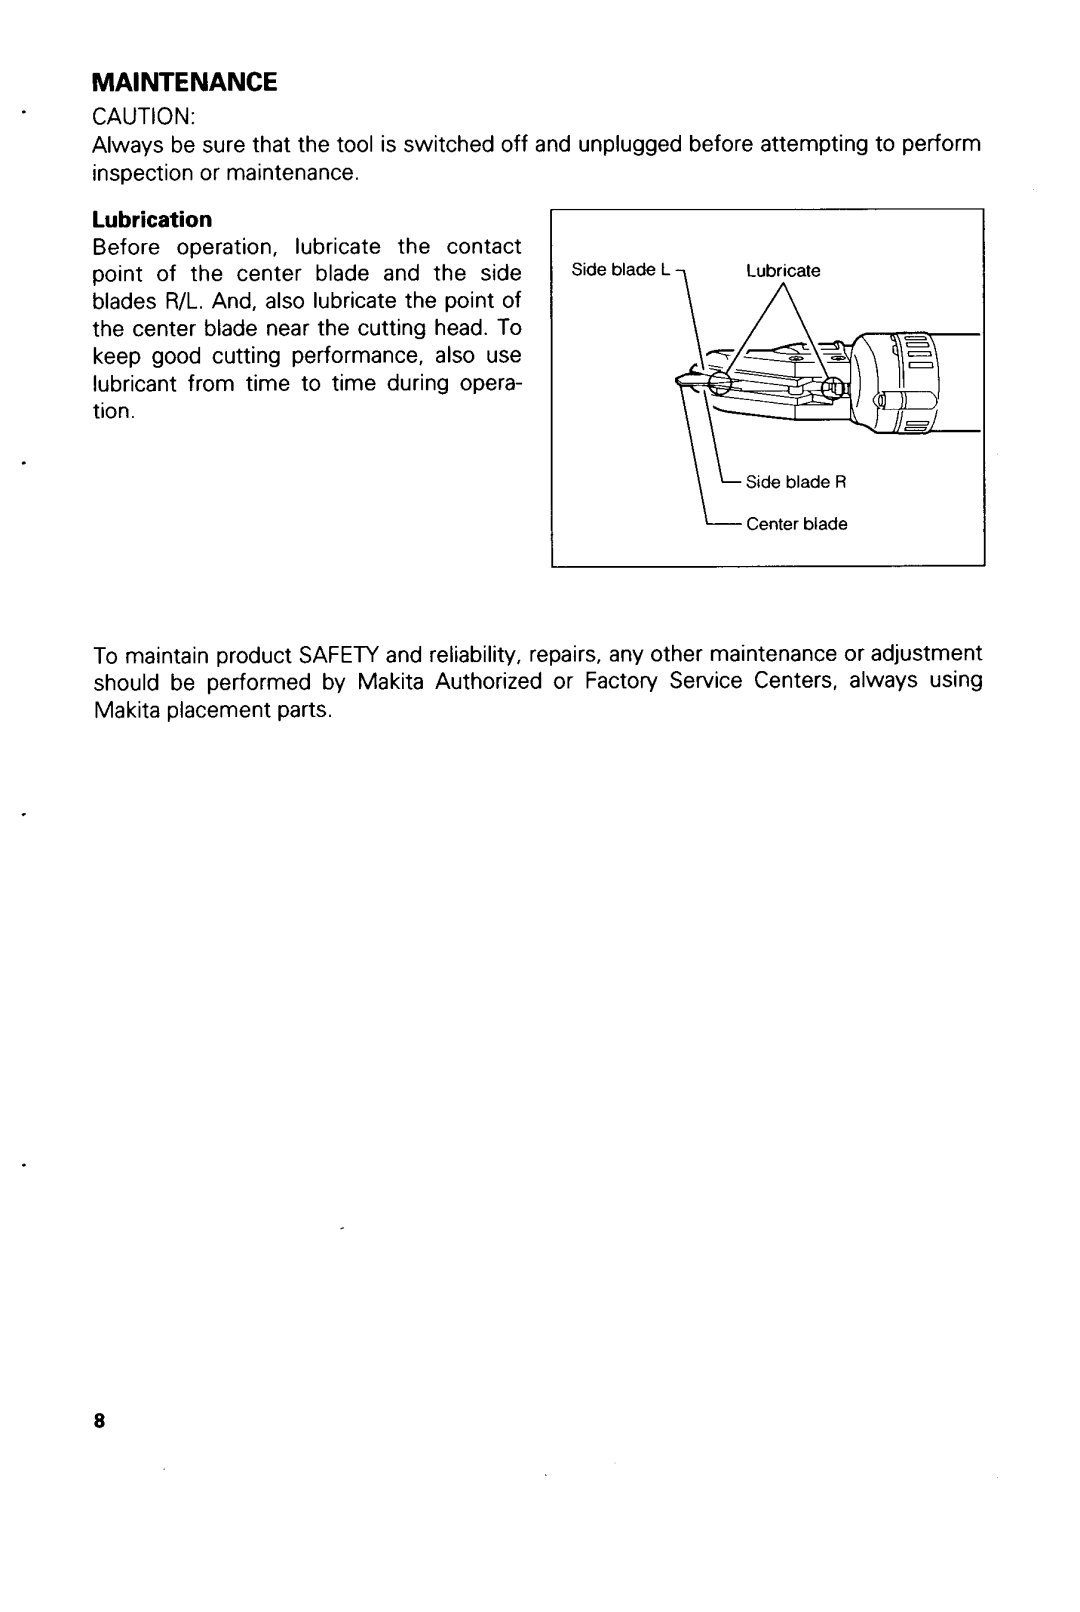 Makita WLAR-L11-L instruction manual MA1NTENANCE, Lubrication 